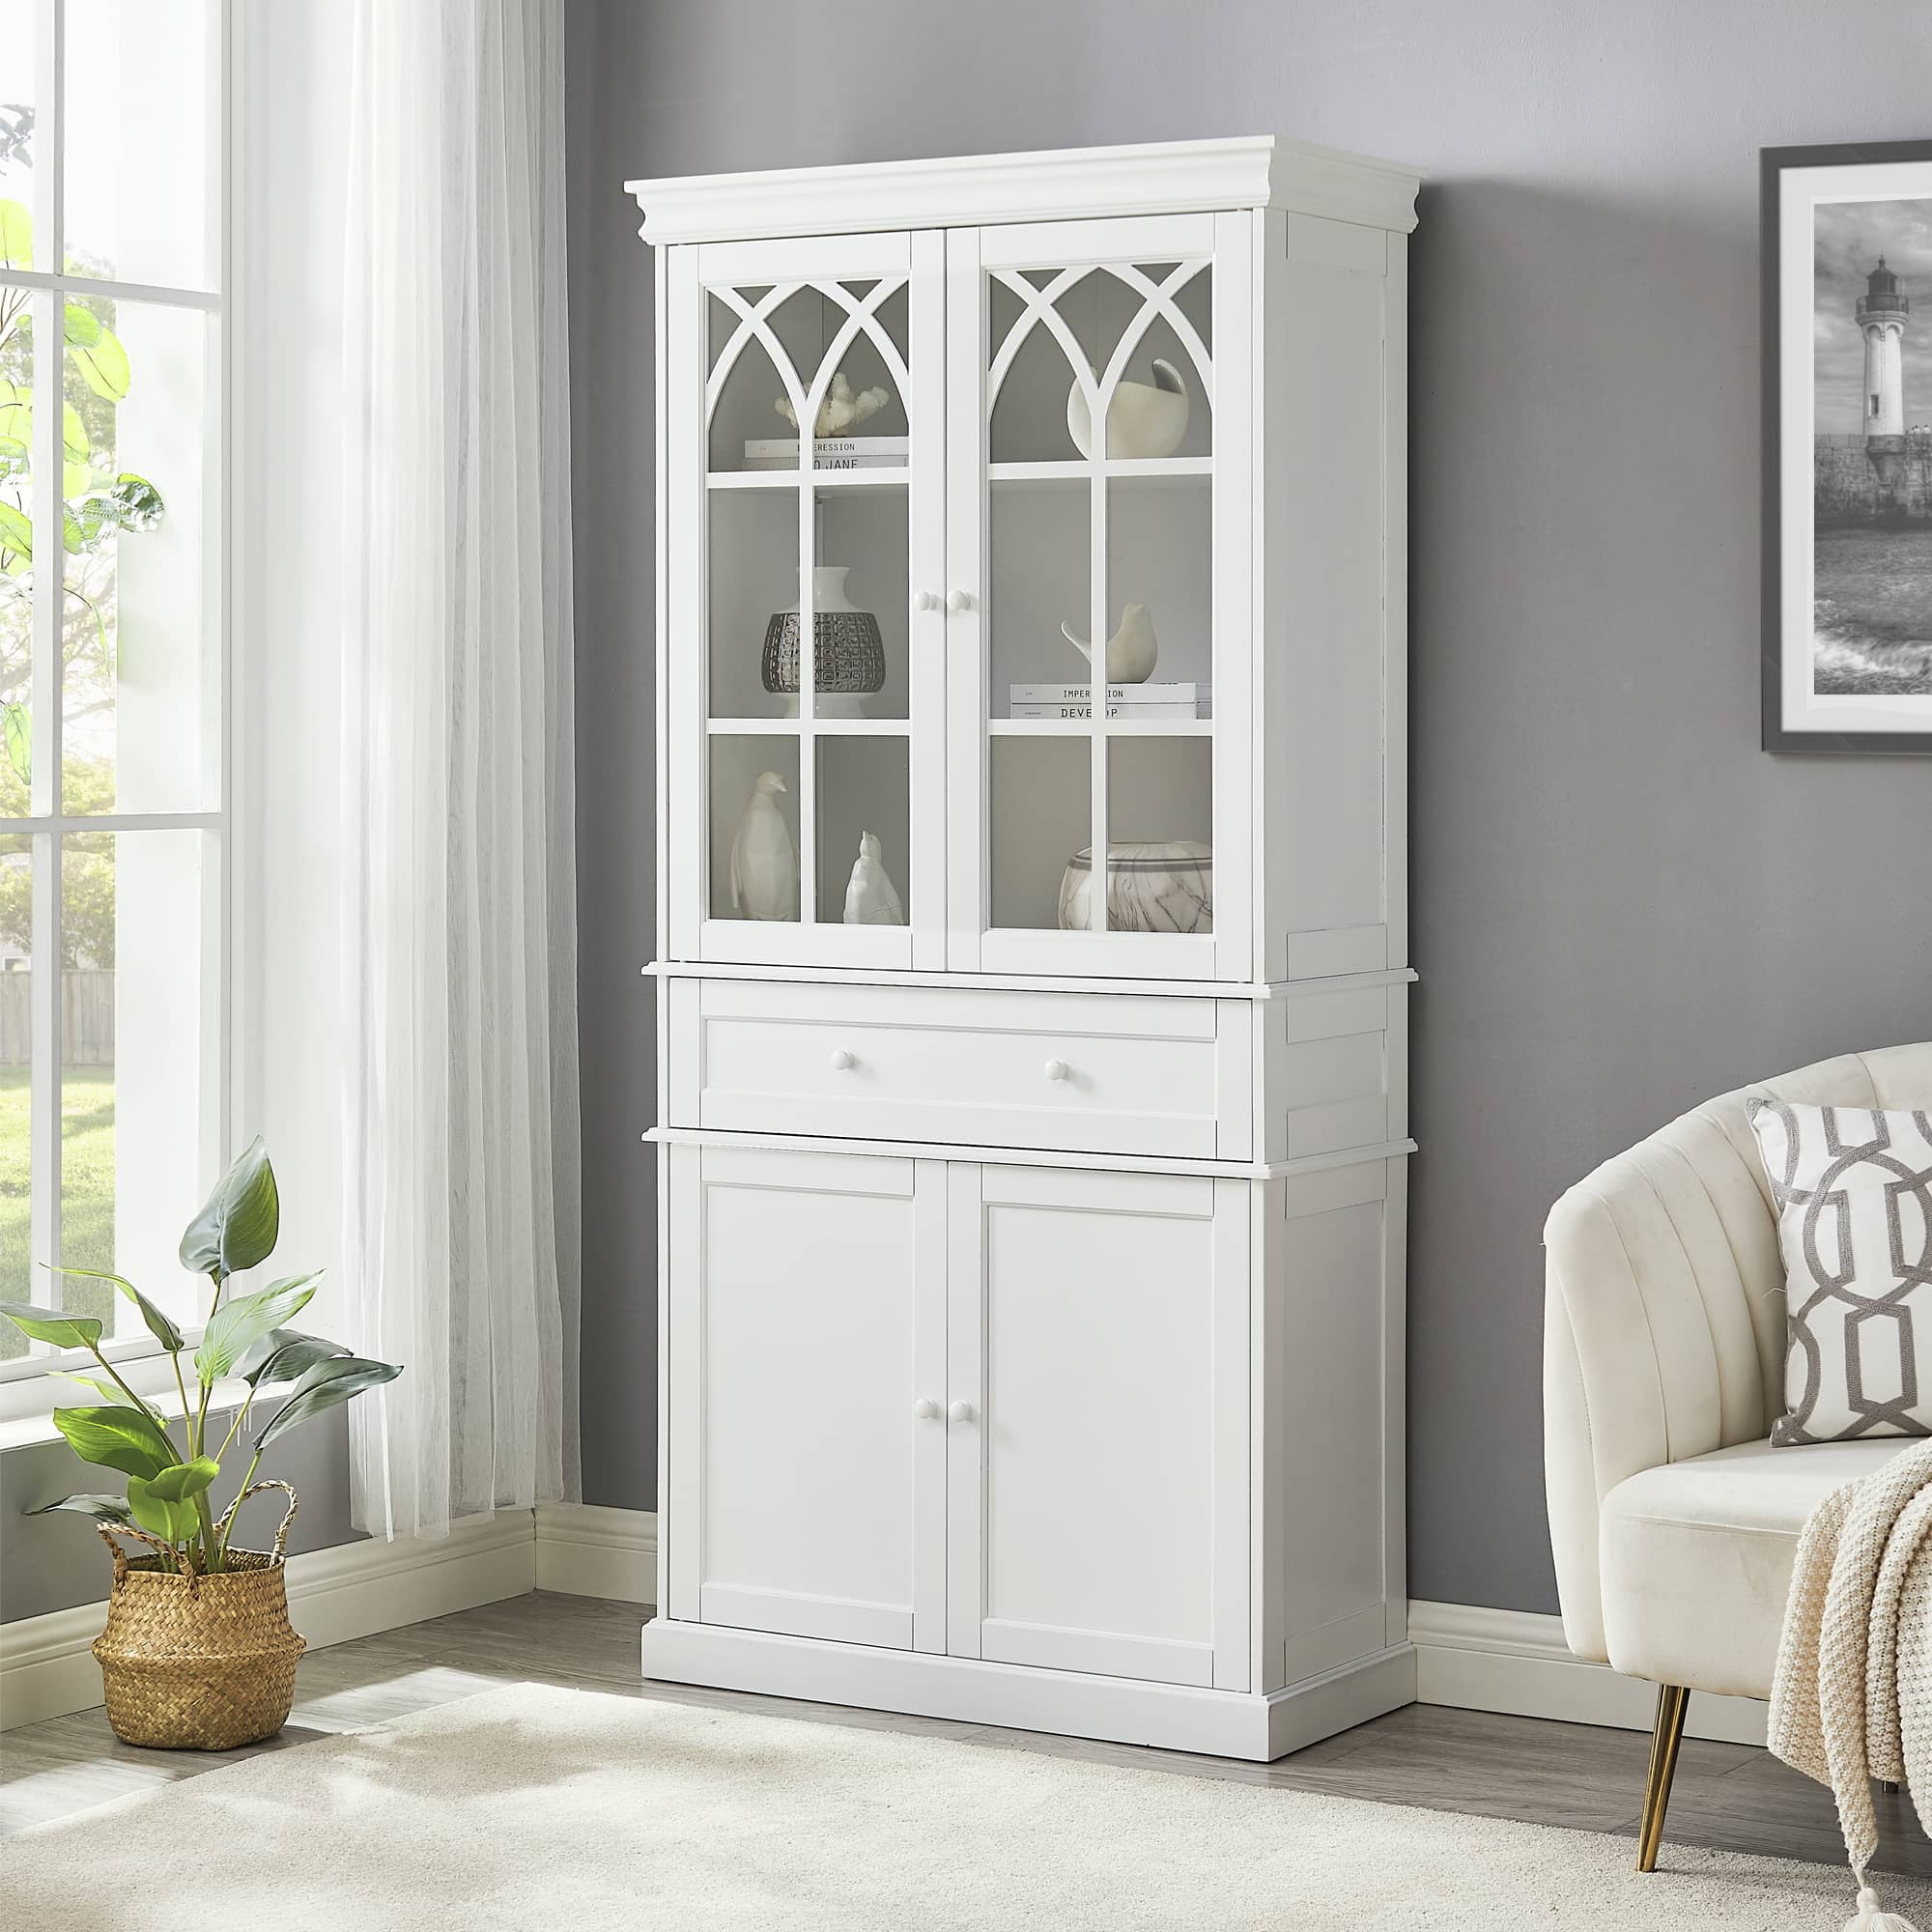 78.3 Elegant Tall Cabinet With Acrylic Panel Doors, Modern Living